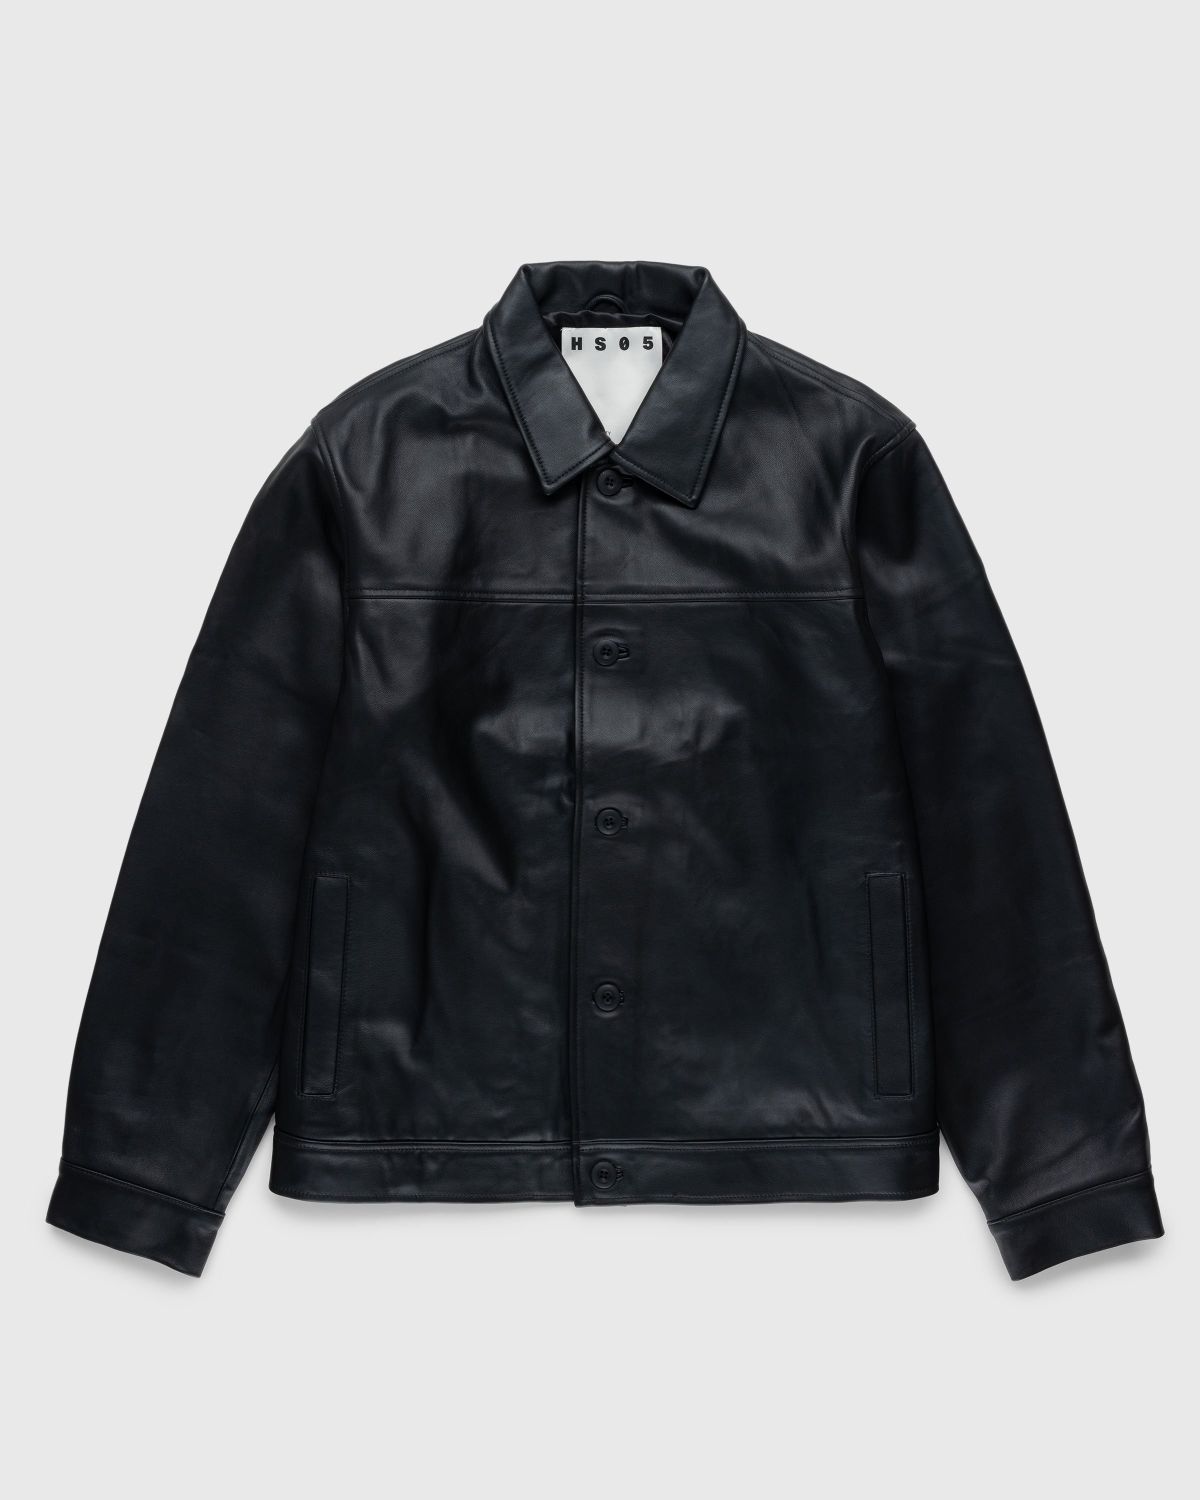 Highsnobiety HS05 – Leather Jacket Black - Outerwear - Black - Image 1